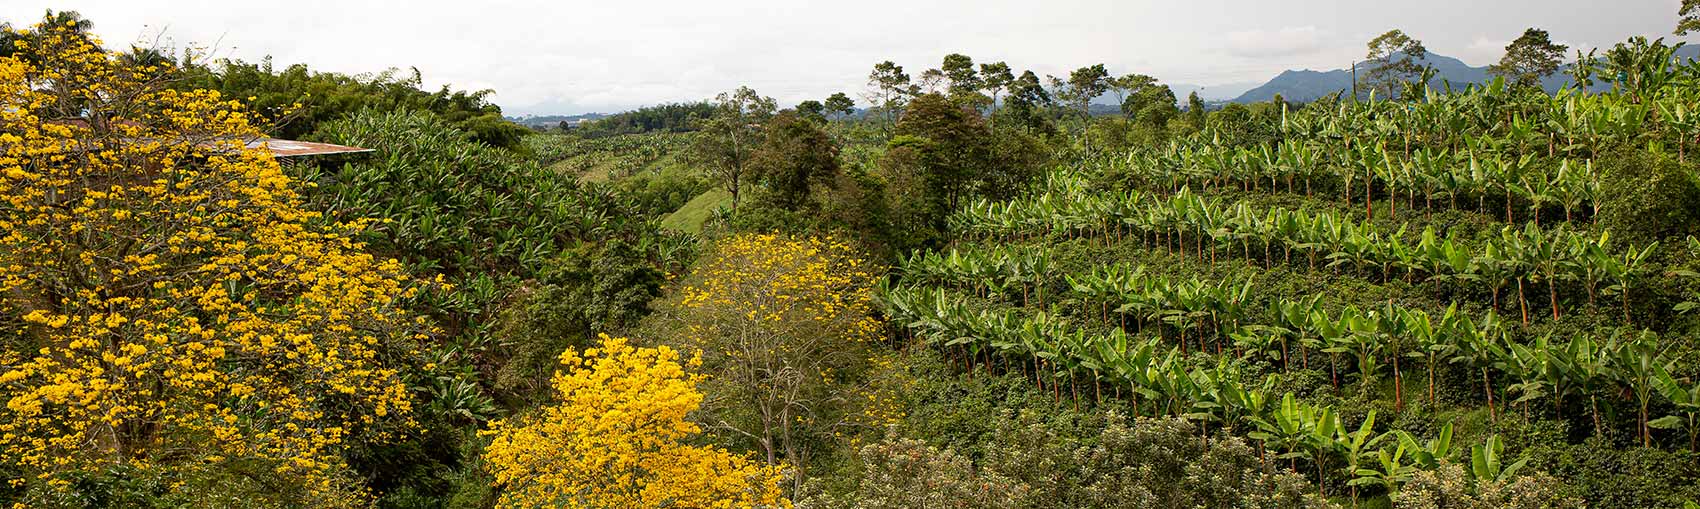 Guaduales und Bioversität beim Kaffeeanbau in Kolumbien. CafCaf Kaffeeblog